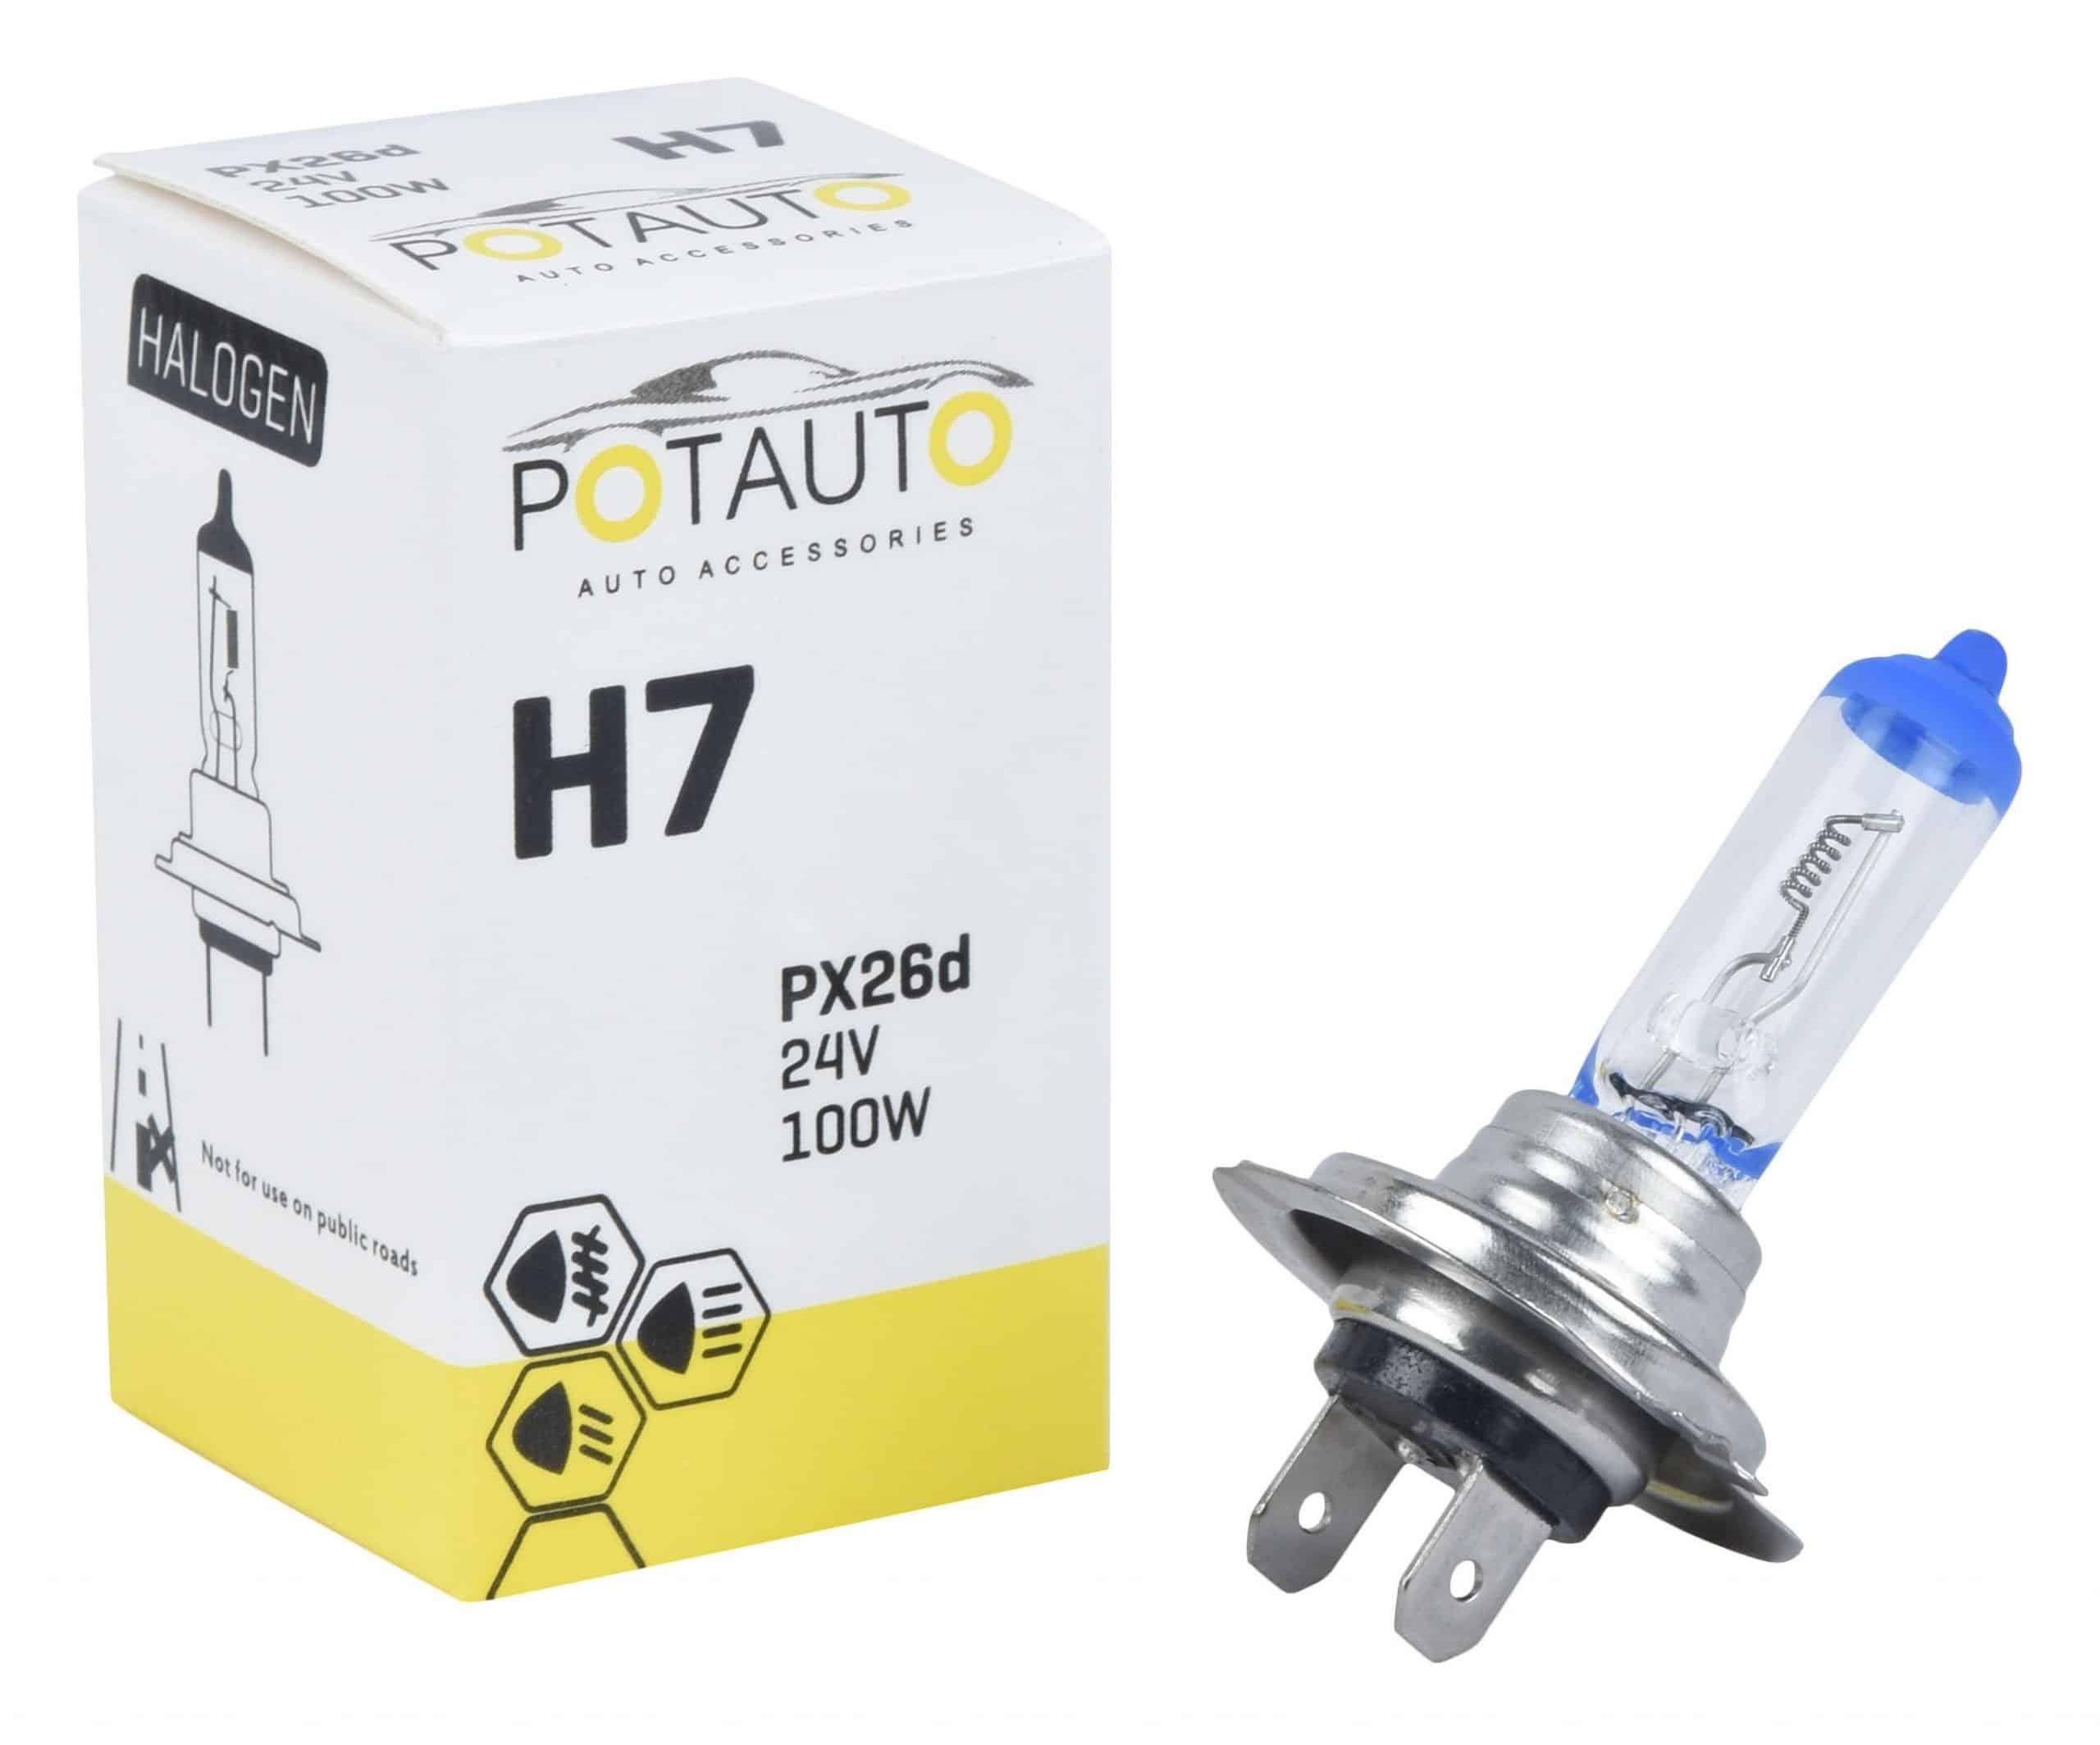 Potauto H7 Headlight Bulb PX26D 12V 100W